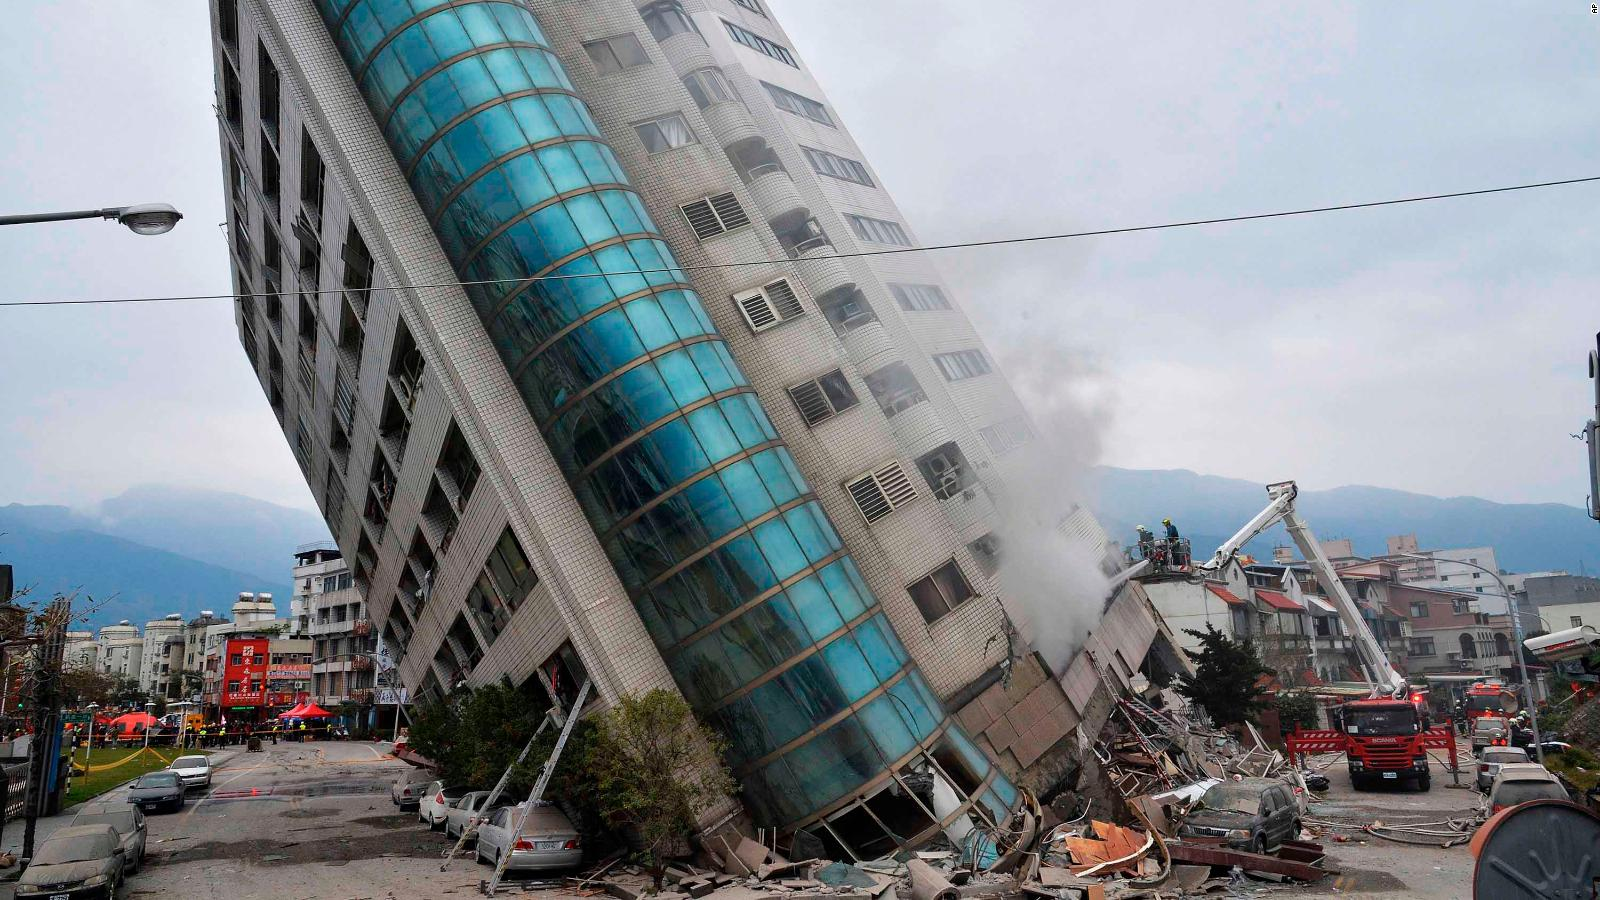 fuerte terremoto de magnitud 6 8 sacude este de taiwan laverdaddemonagas.com 180207093430 20 taiwan quake 0207 full 169